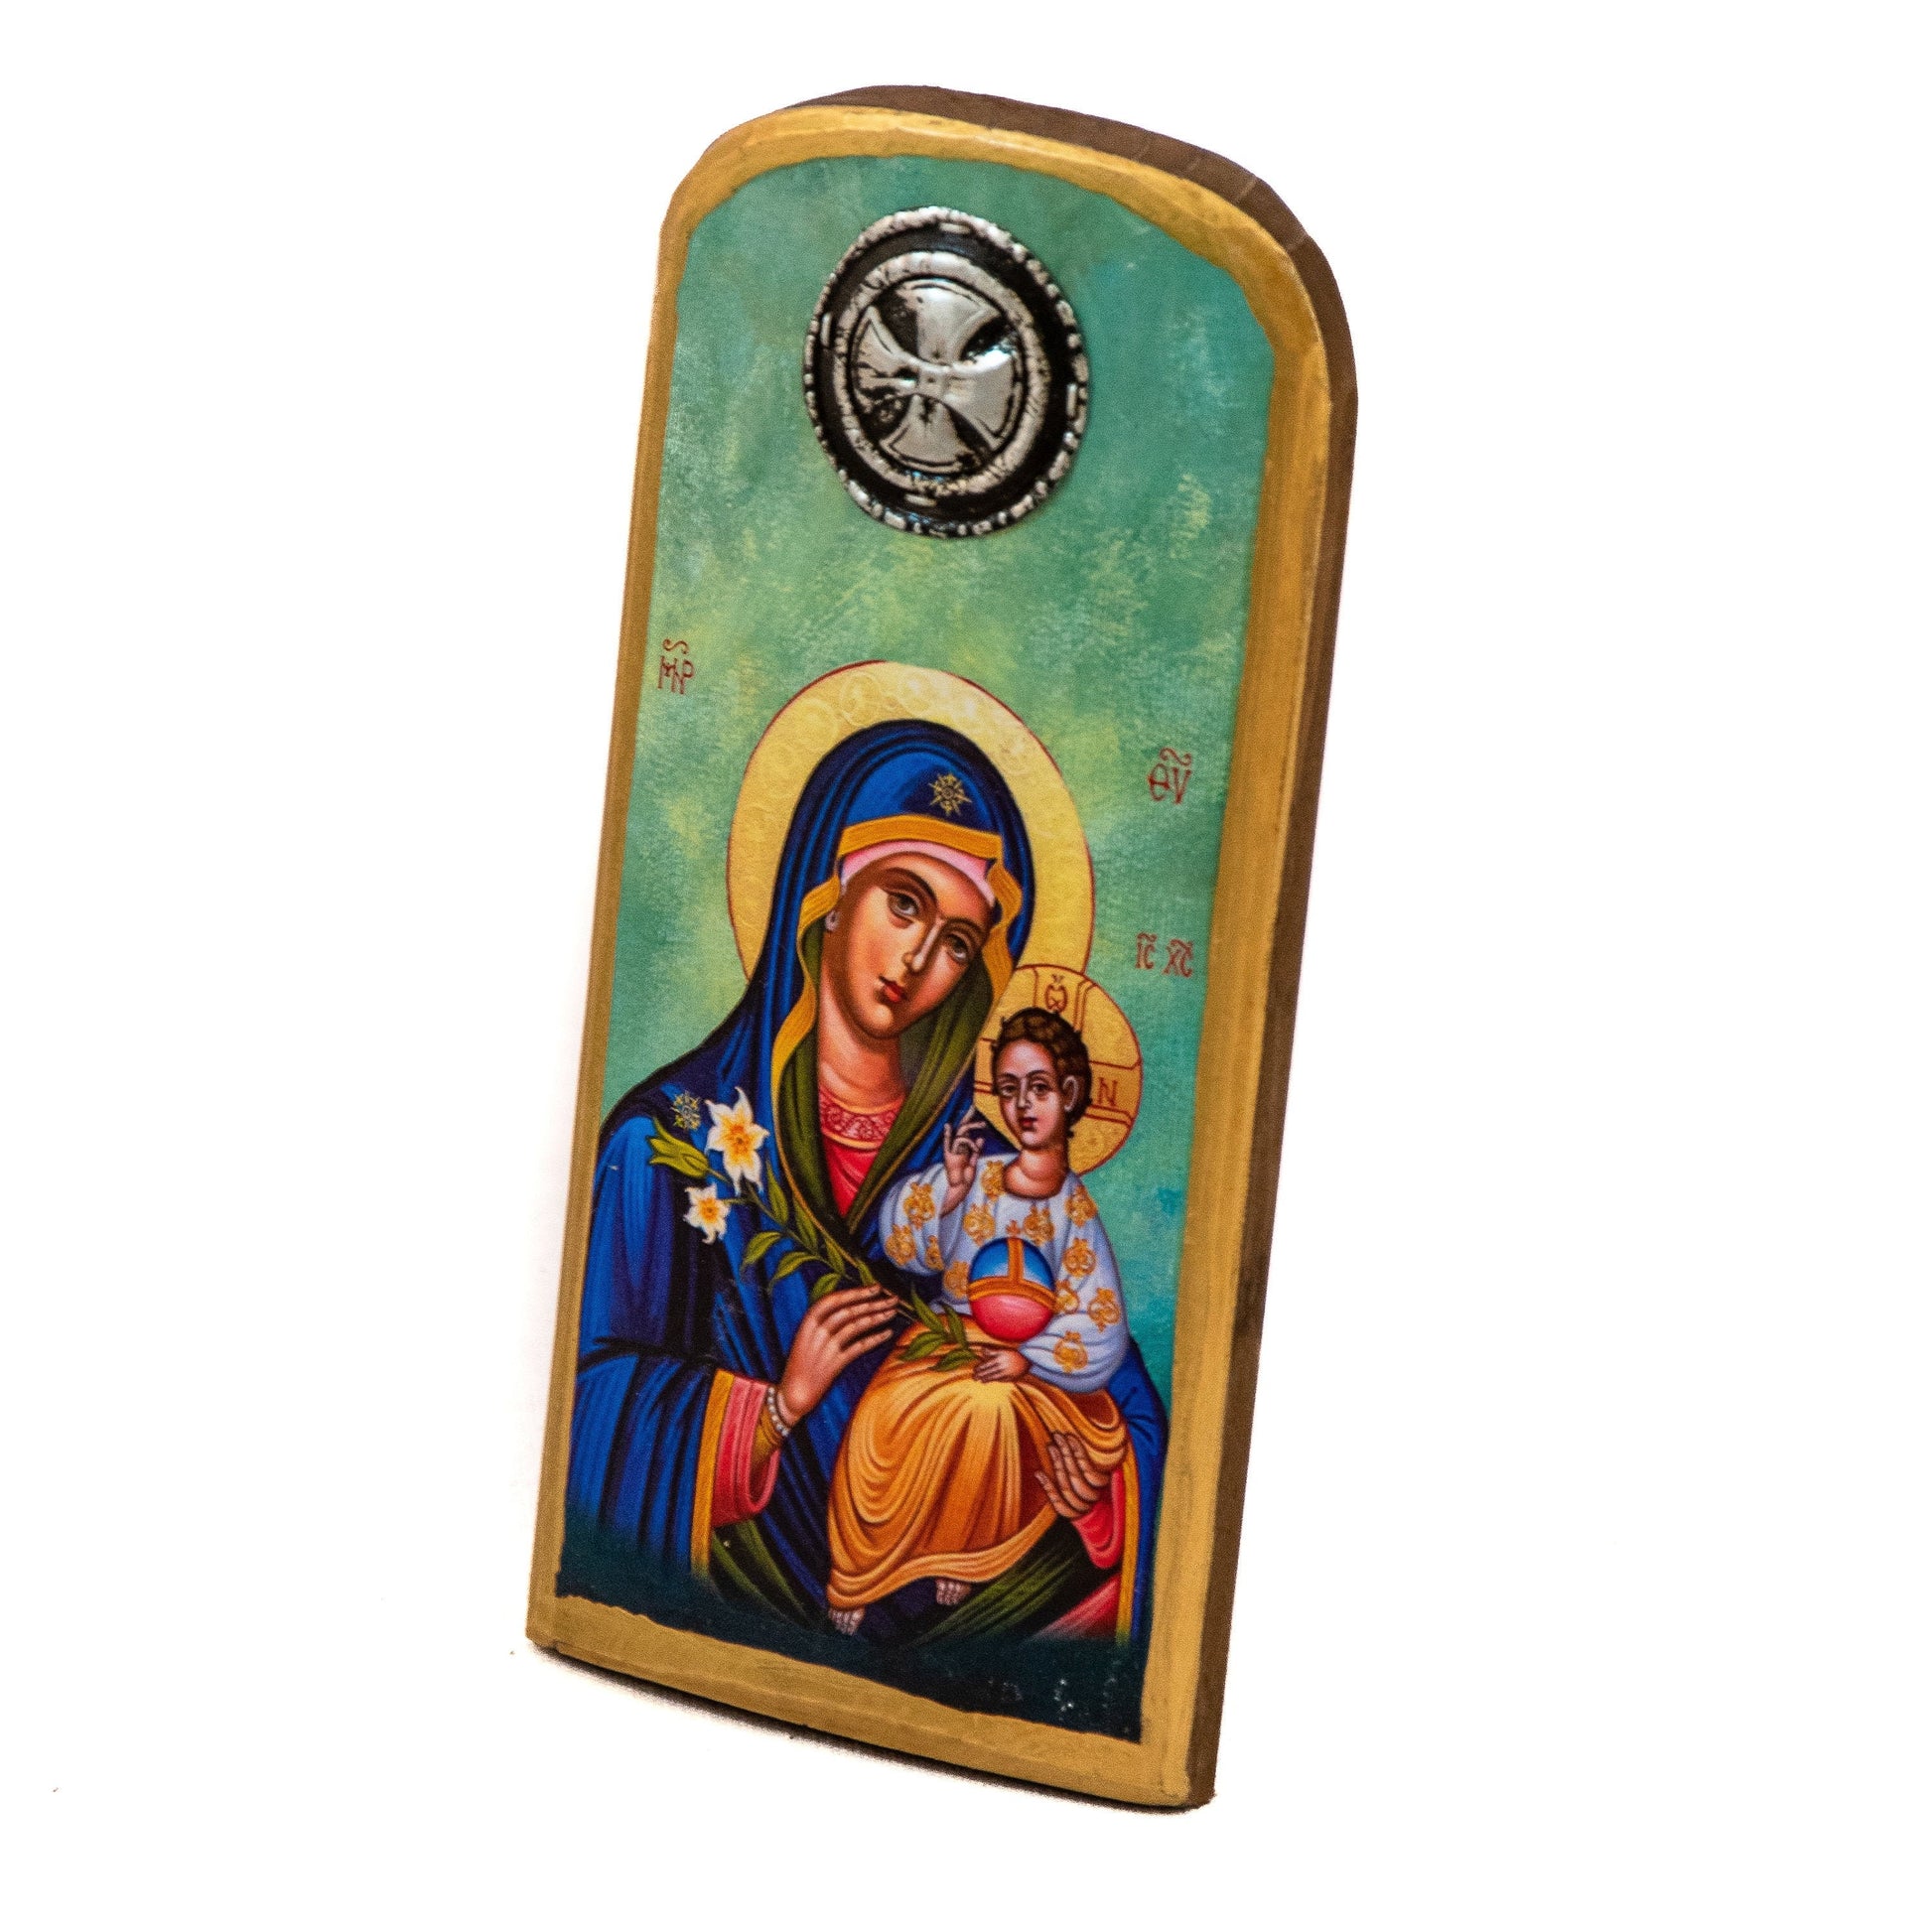 Virgin Mary icon Panagia, Handmade Greek Orthodox icon of Theotokos, Mother of God Byzantine art wall hanging wood plaque, wedding gift TheHolyArt